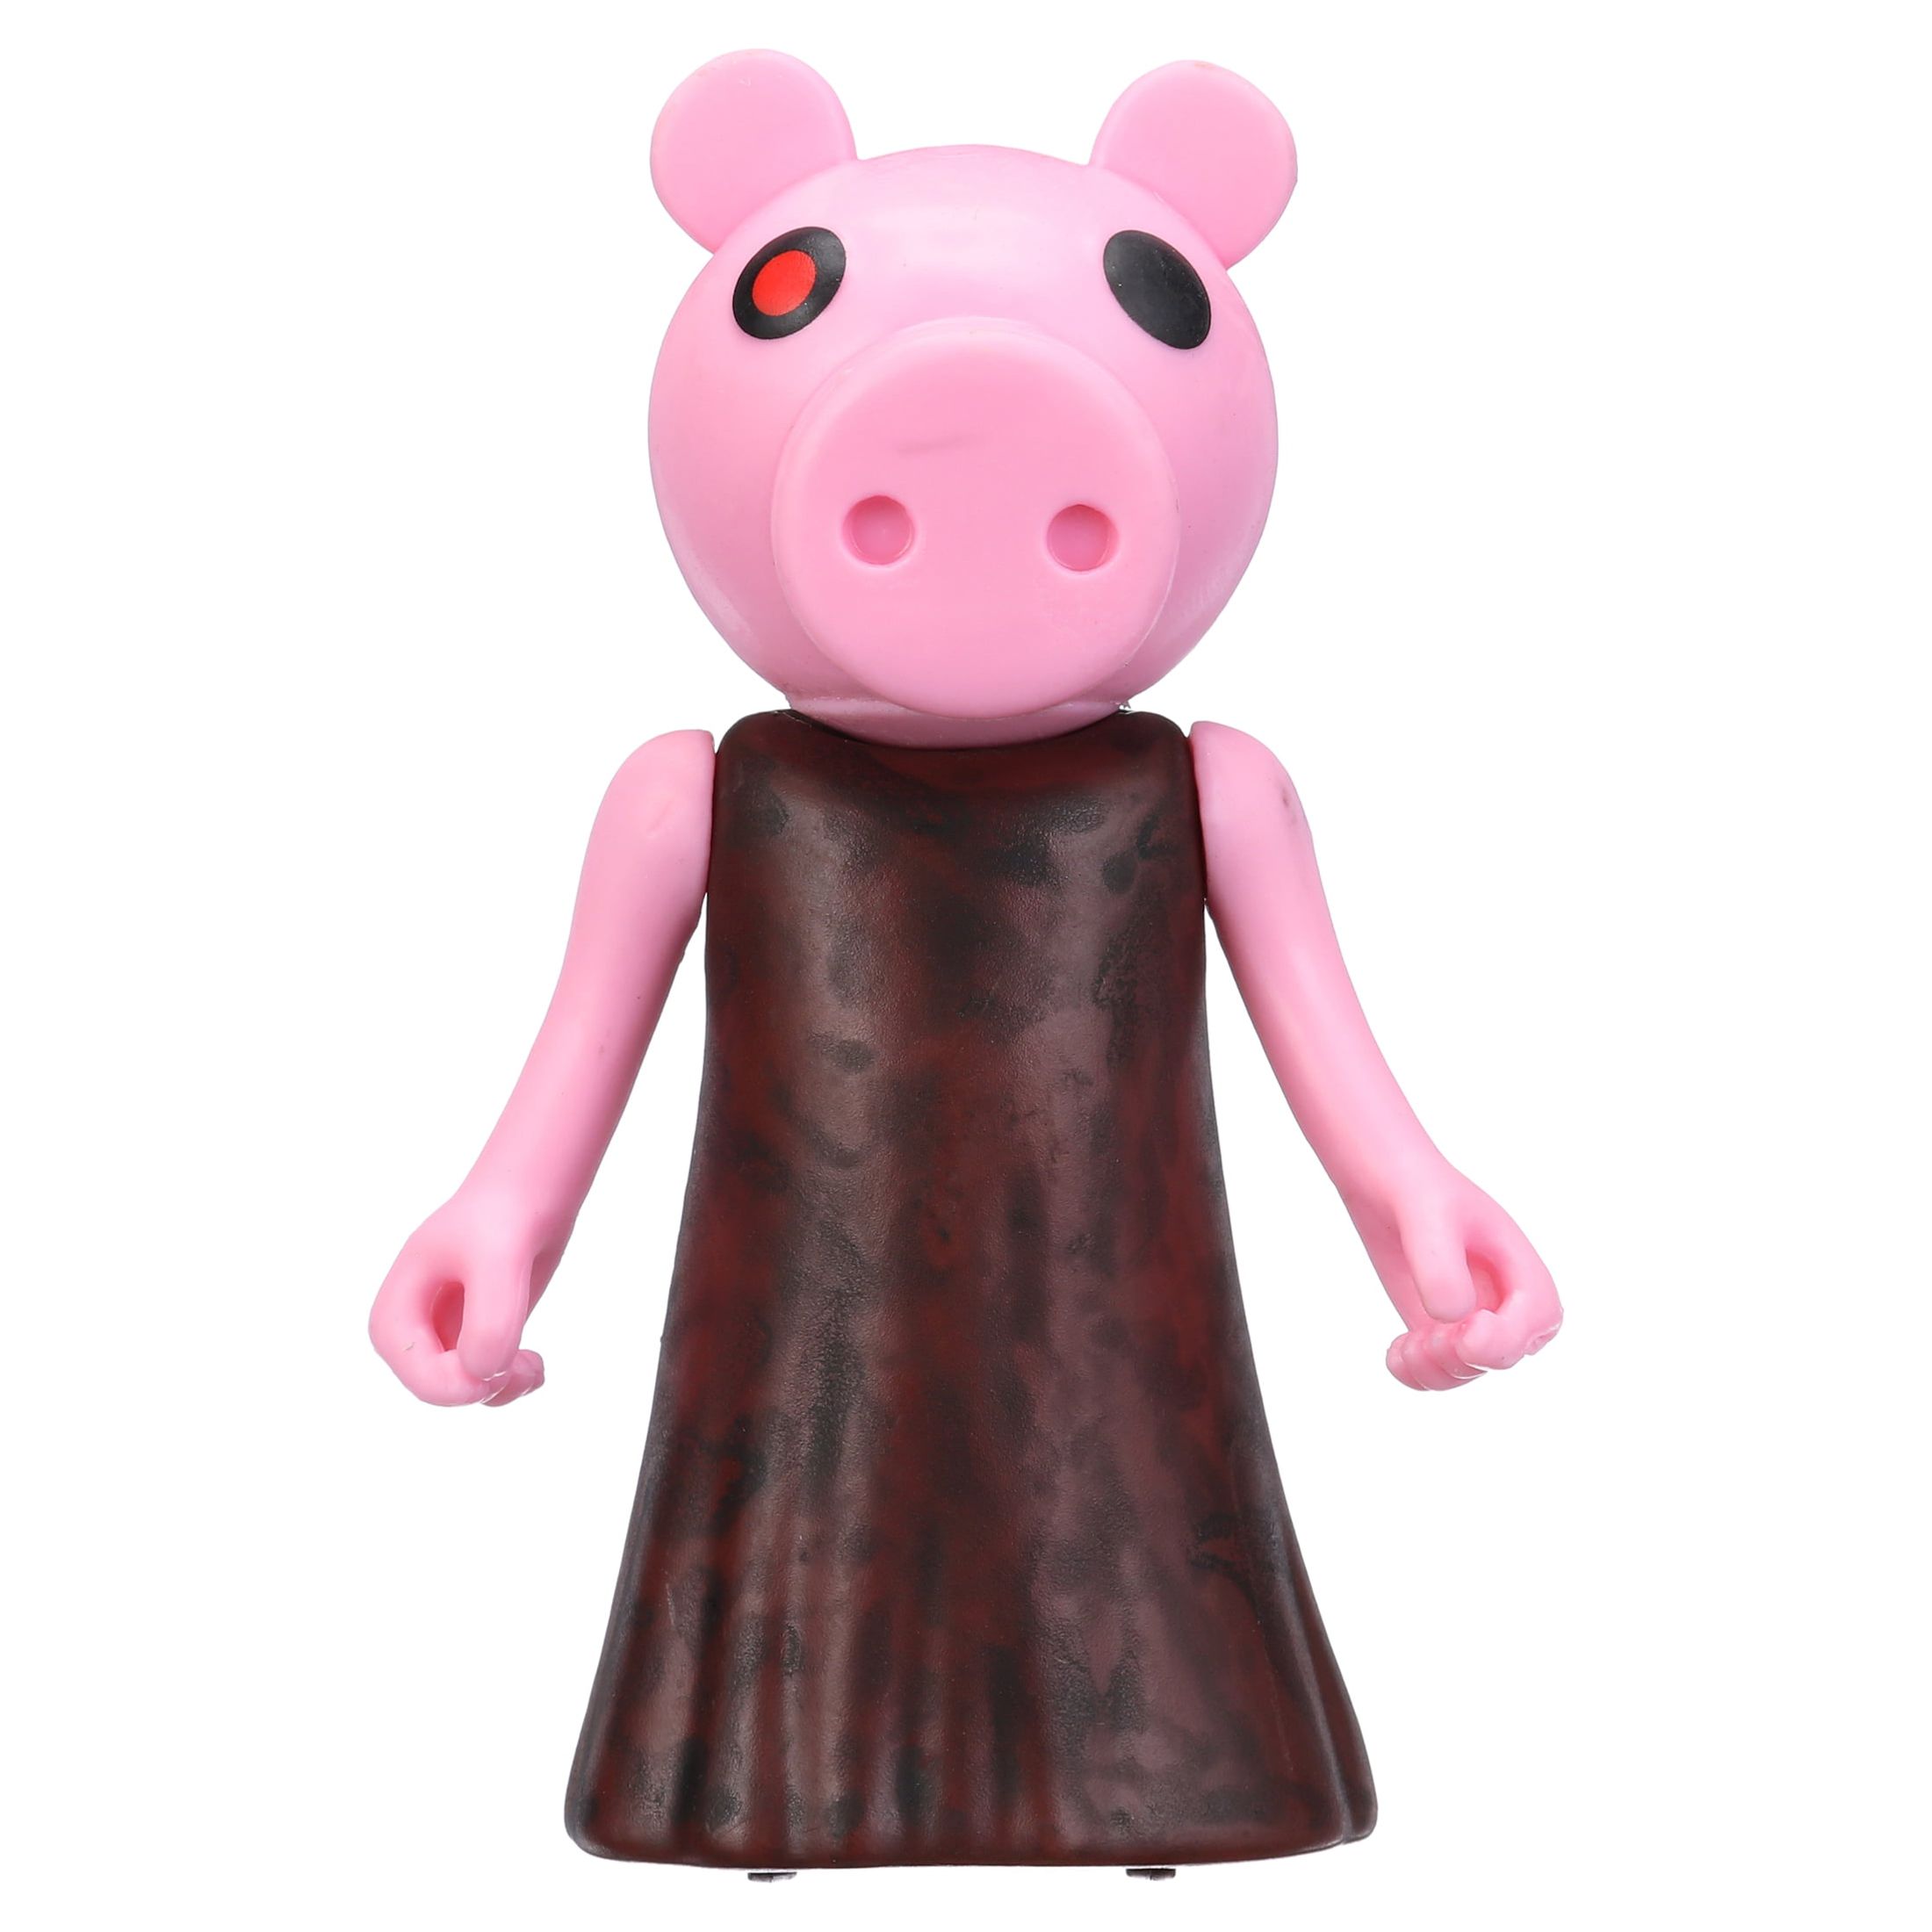 PIGGY - Piggy Action Figure (3.5" Buildable Toy, Series 1) [Includes DLC] - image 3 of 5